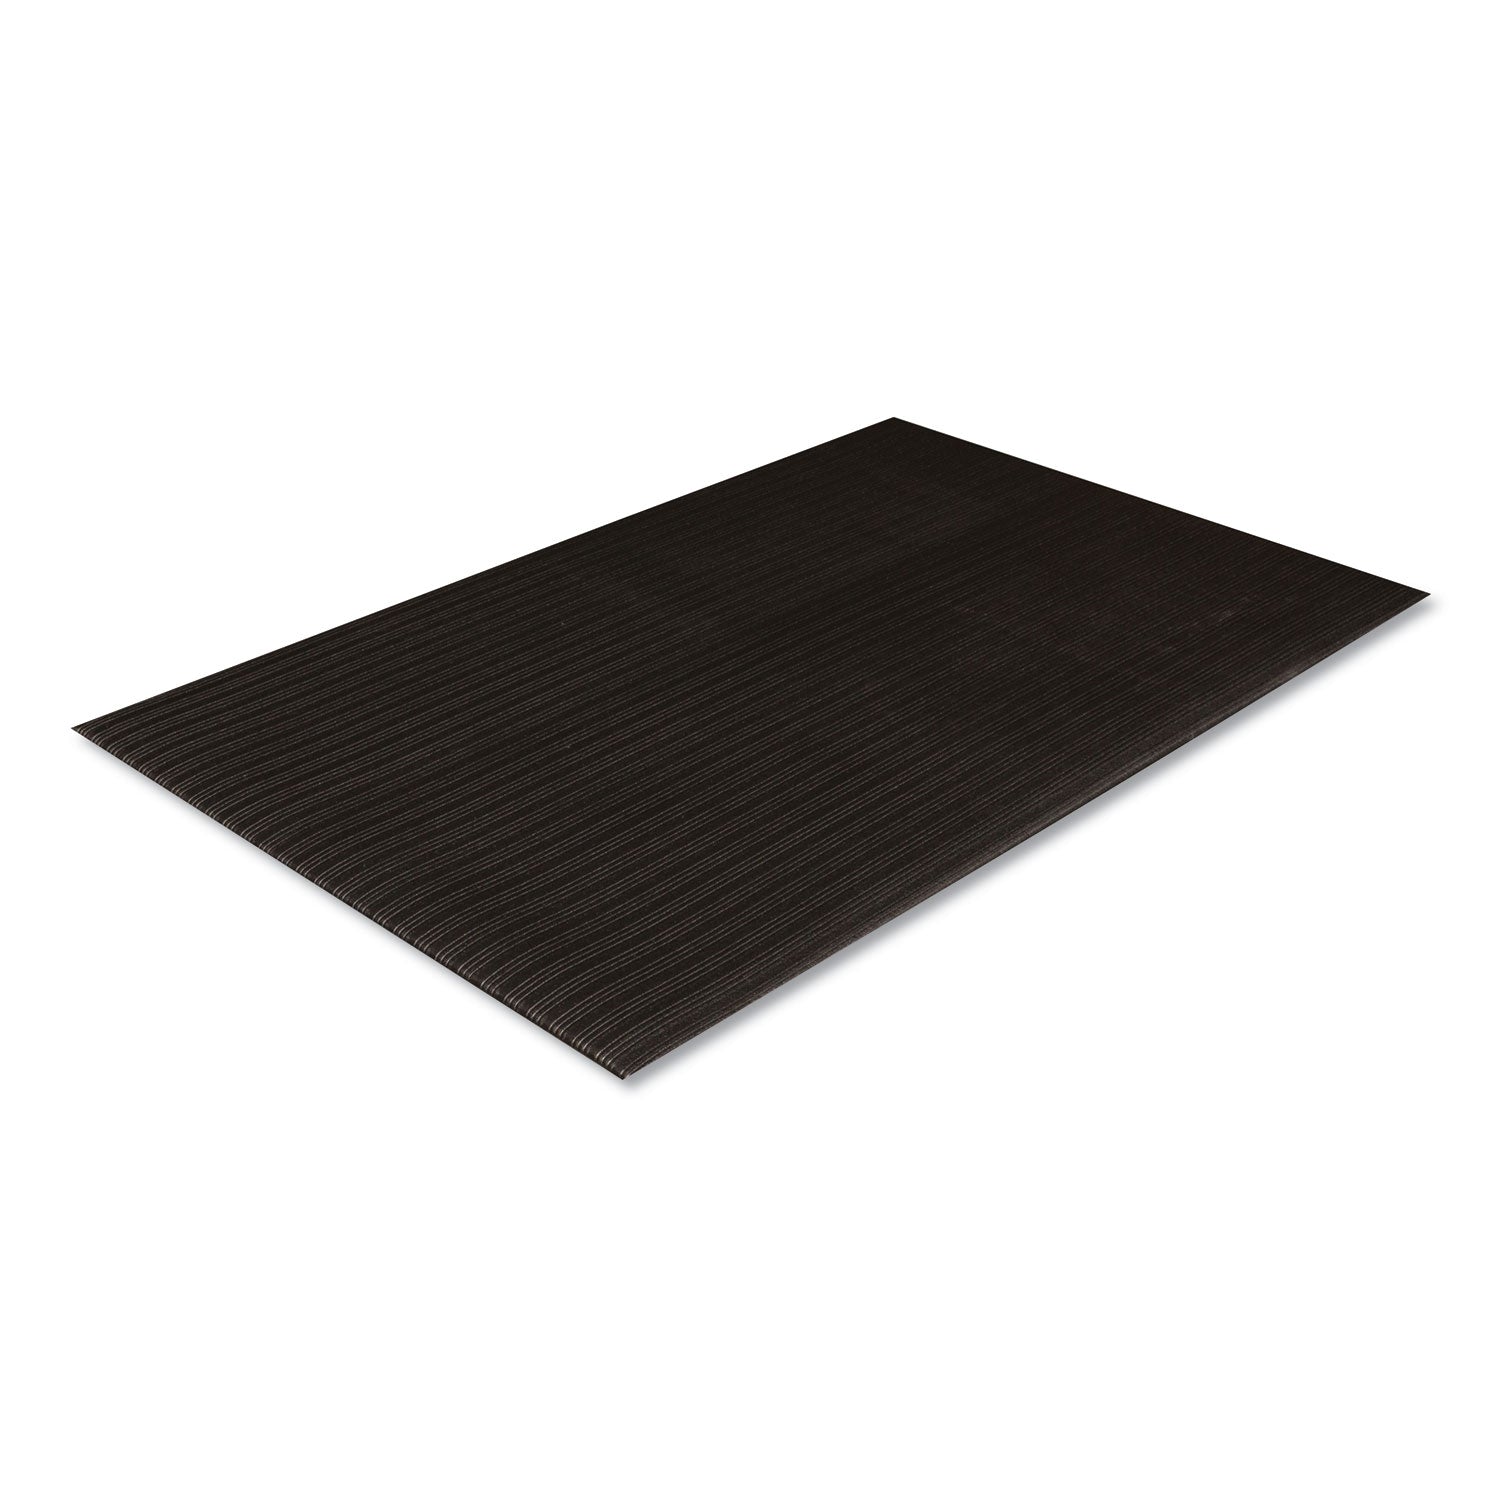 Ribbed Vinyl Anti-Fatigue Mat, 36 x 60, Black - 